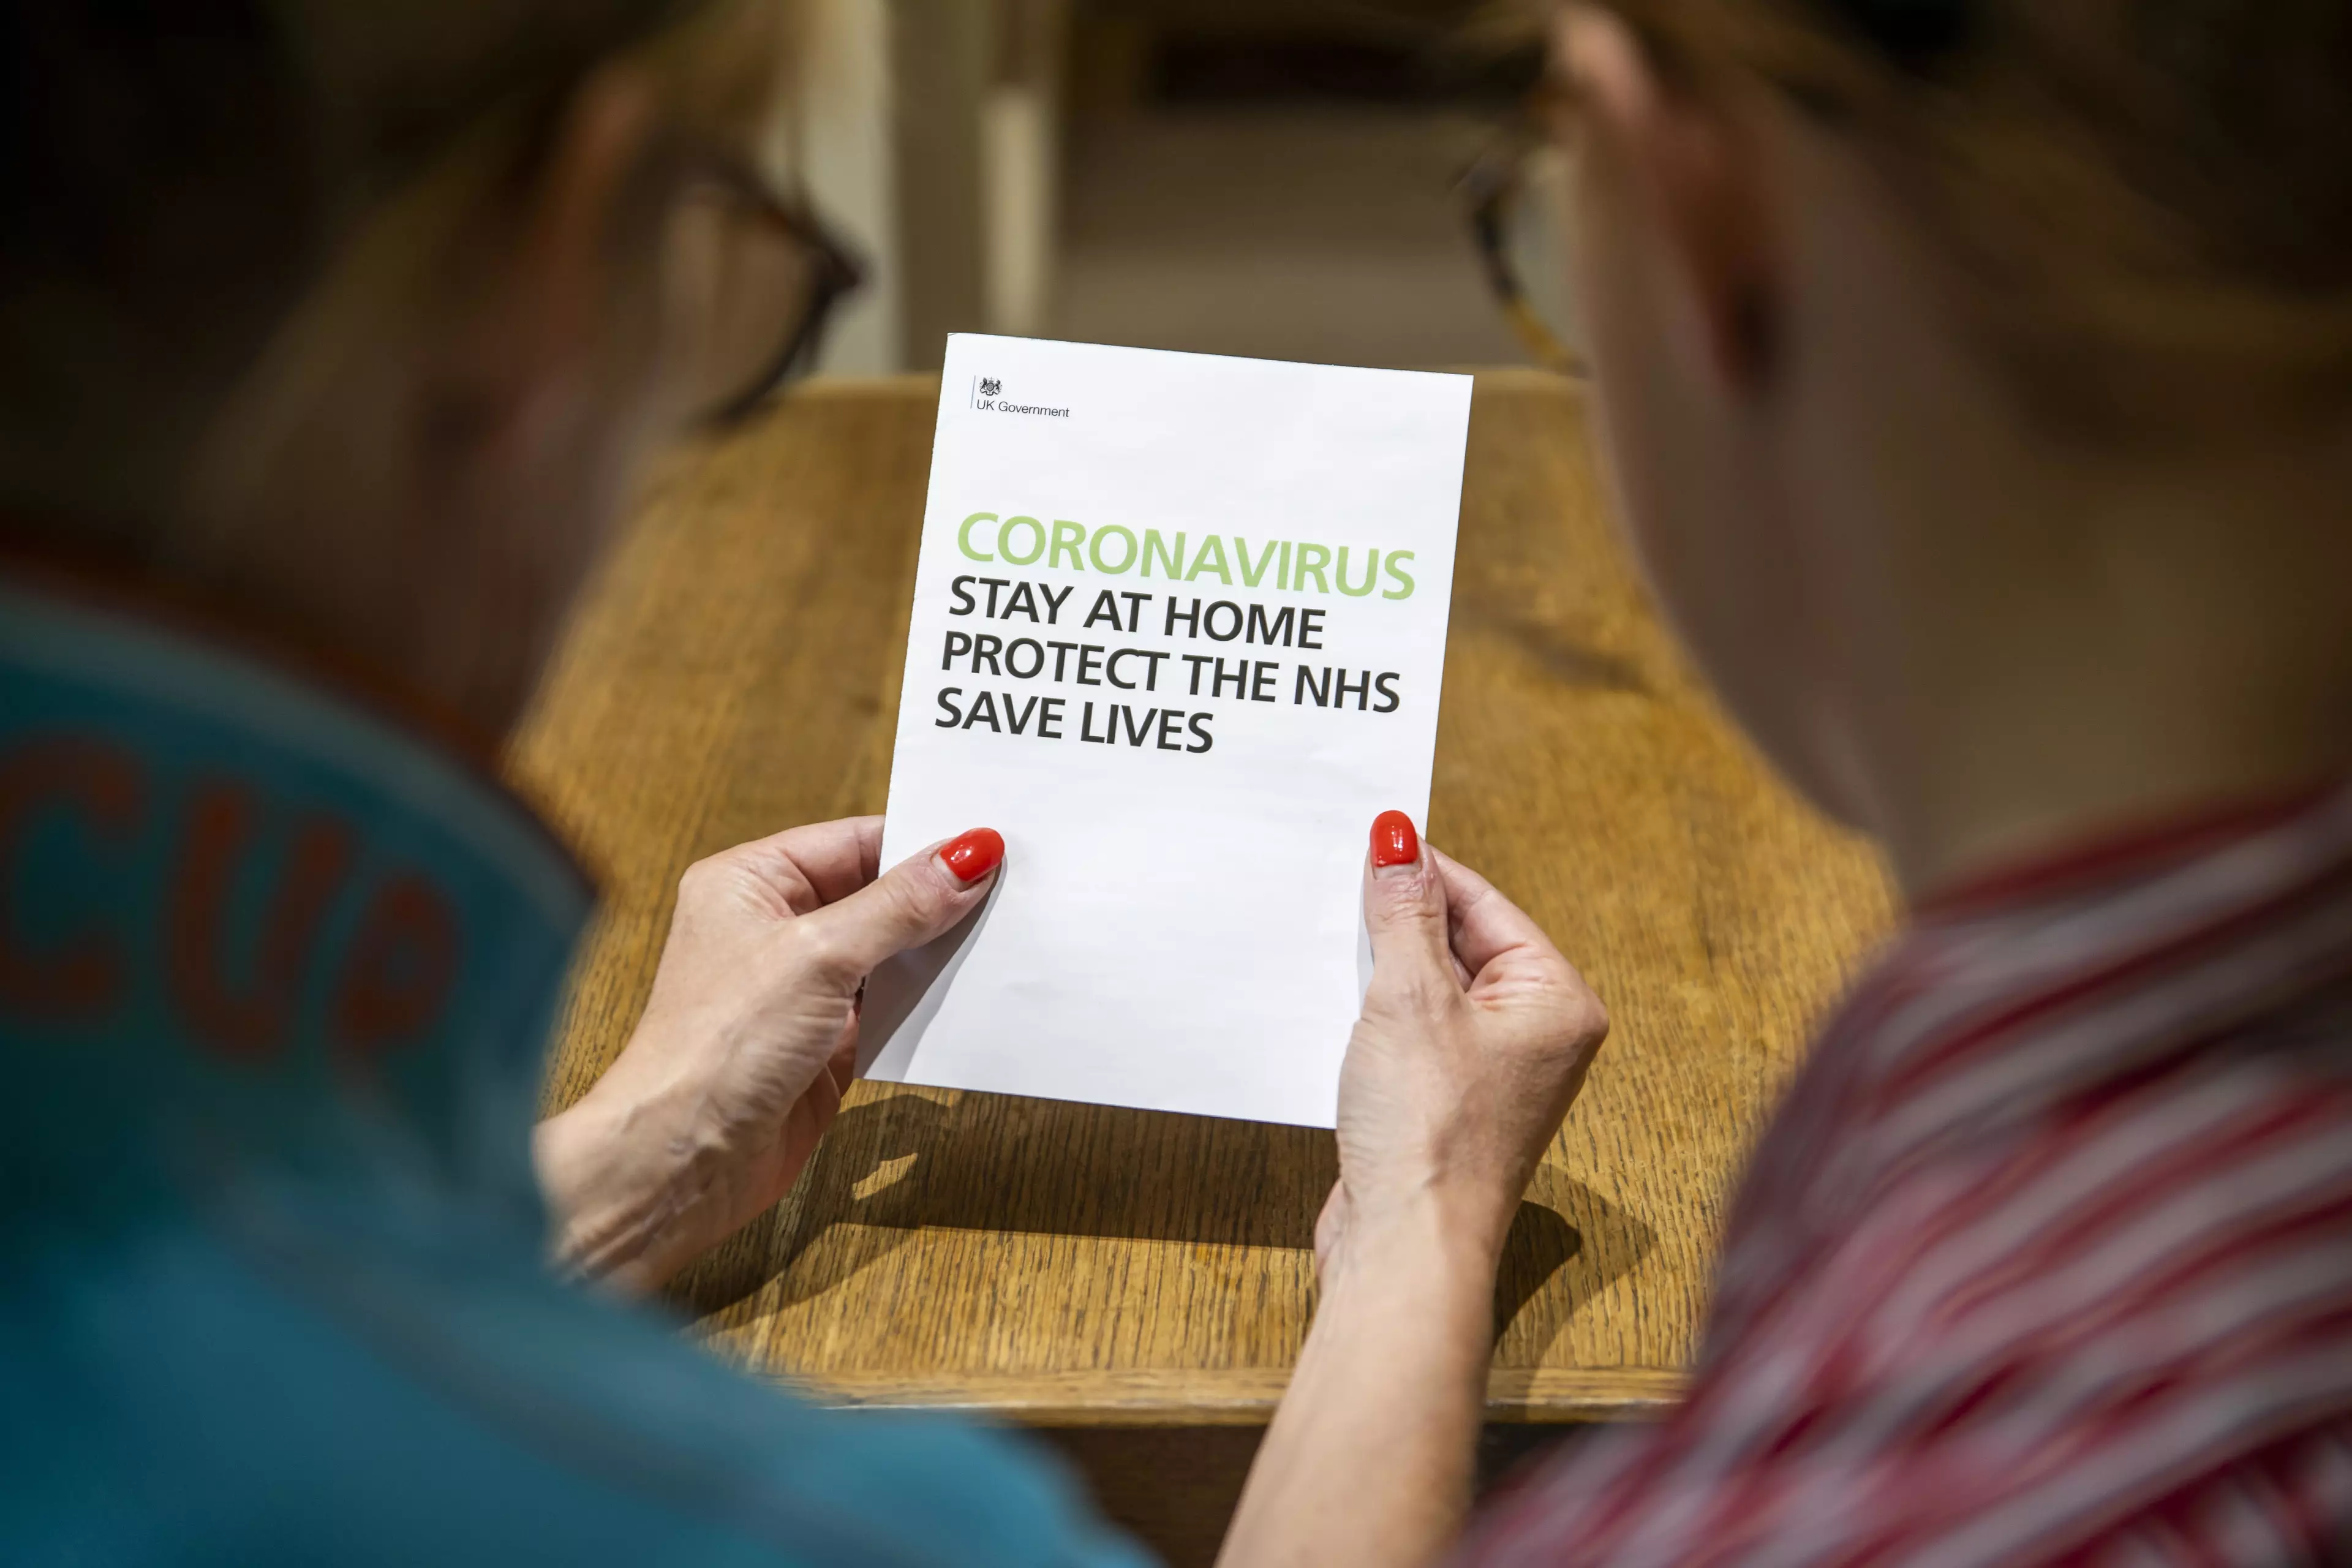 Information has been sent to all UK households regarding coronavirus.